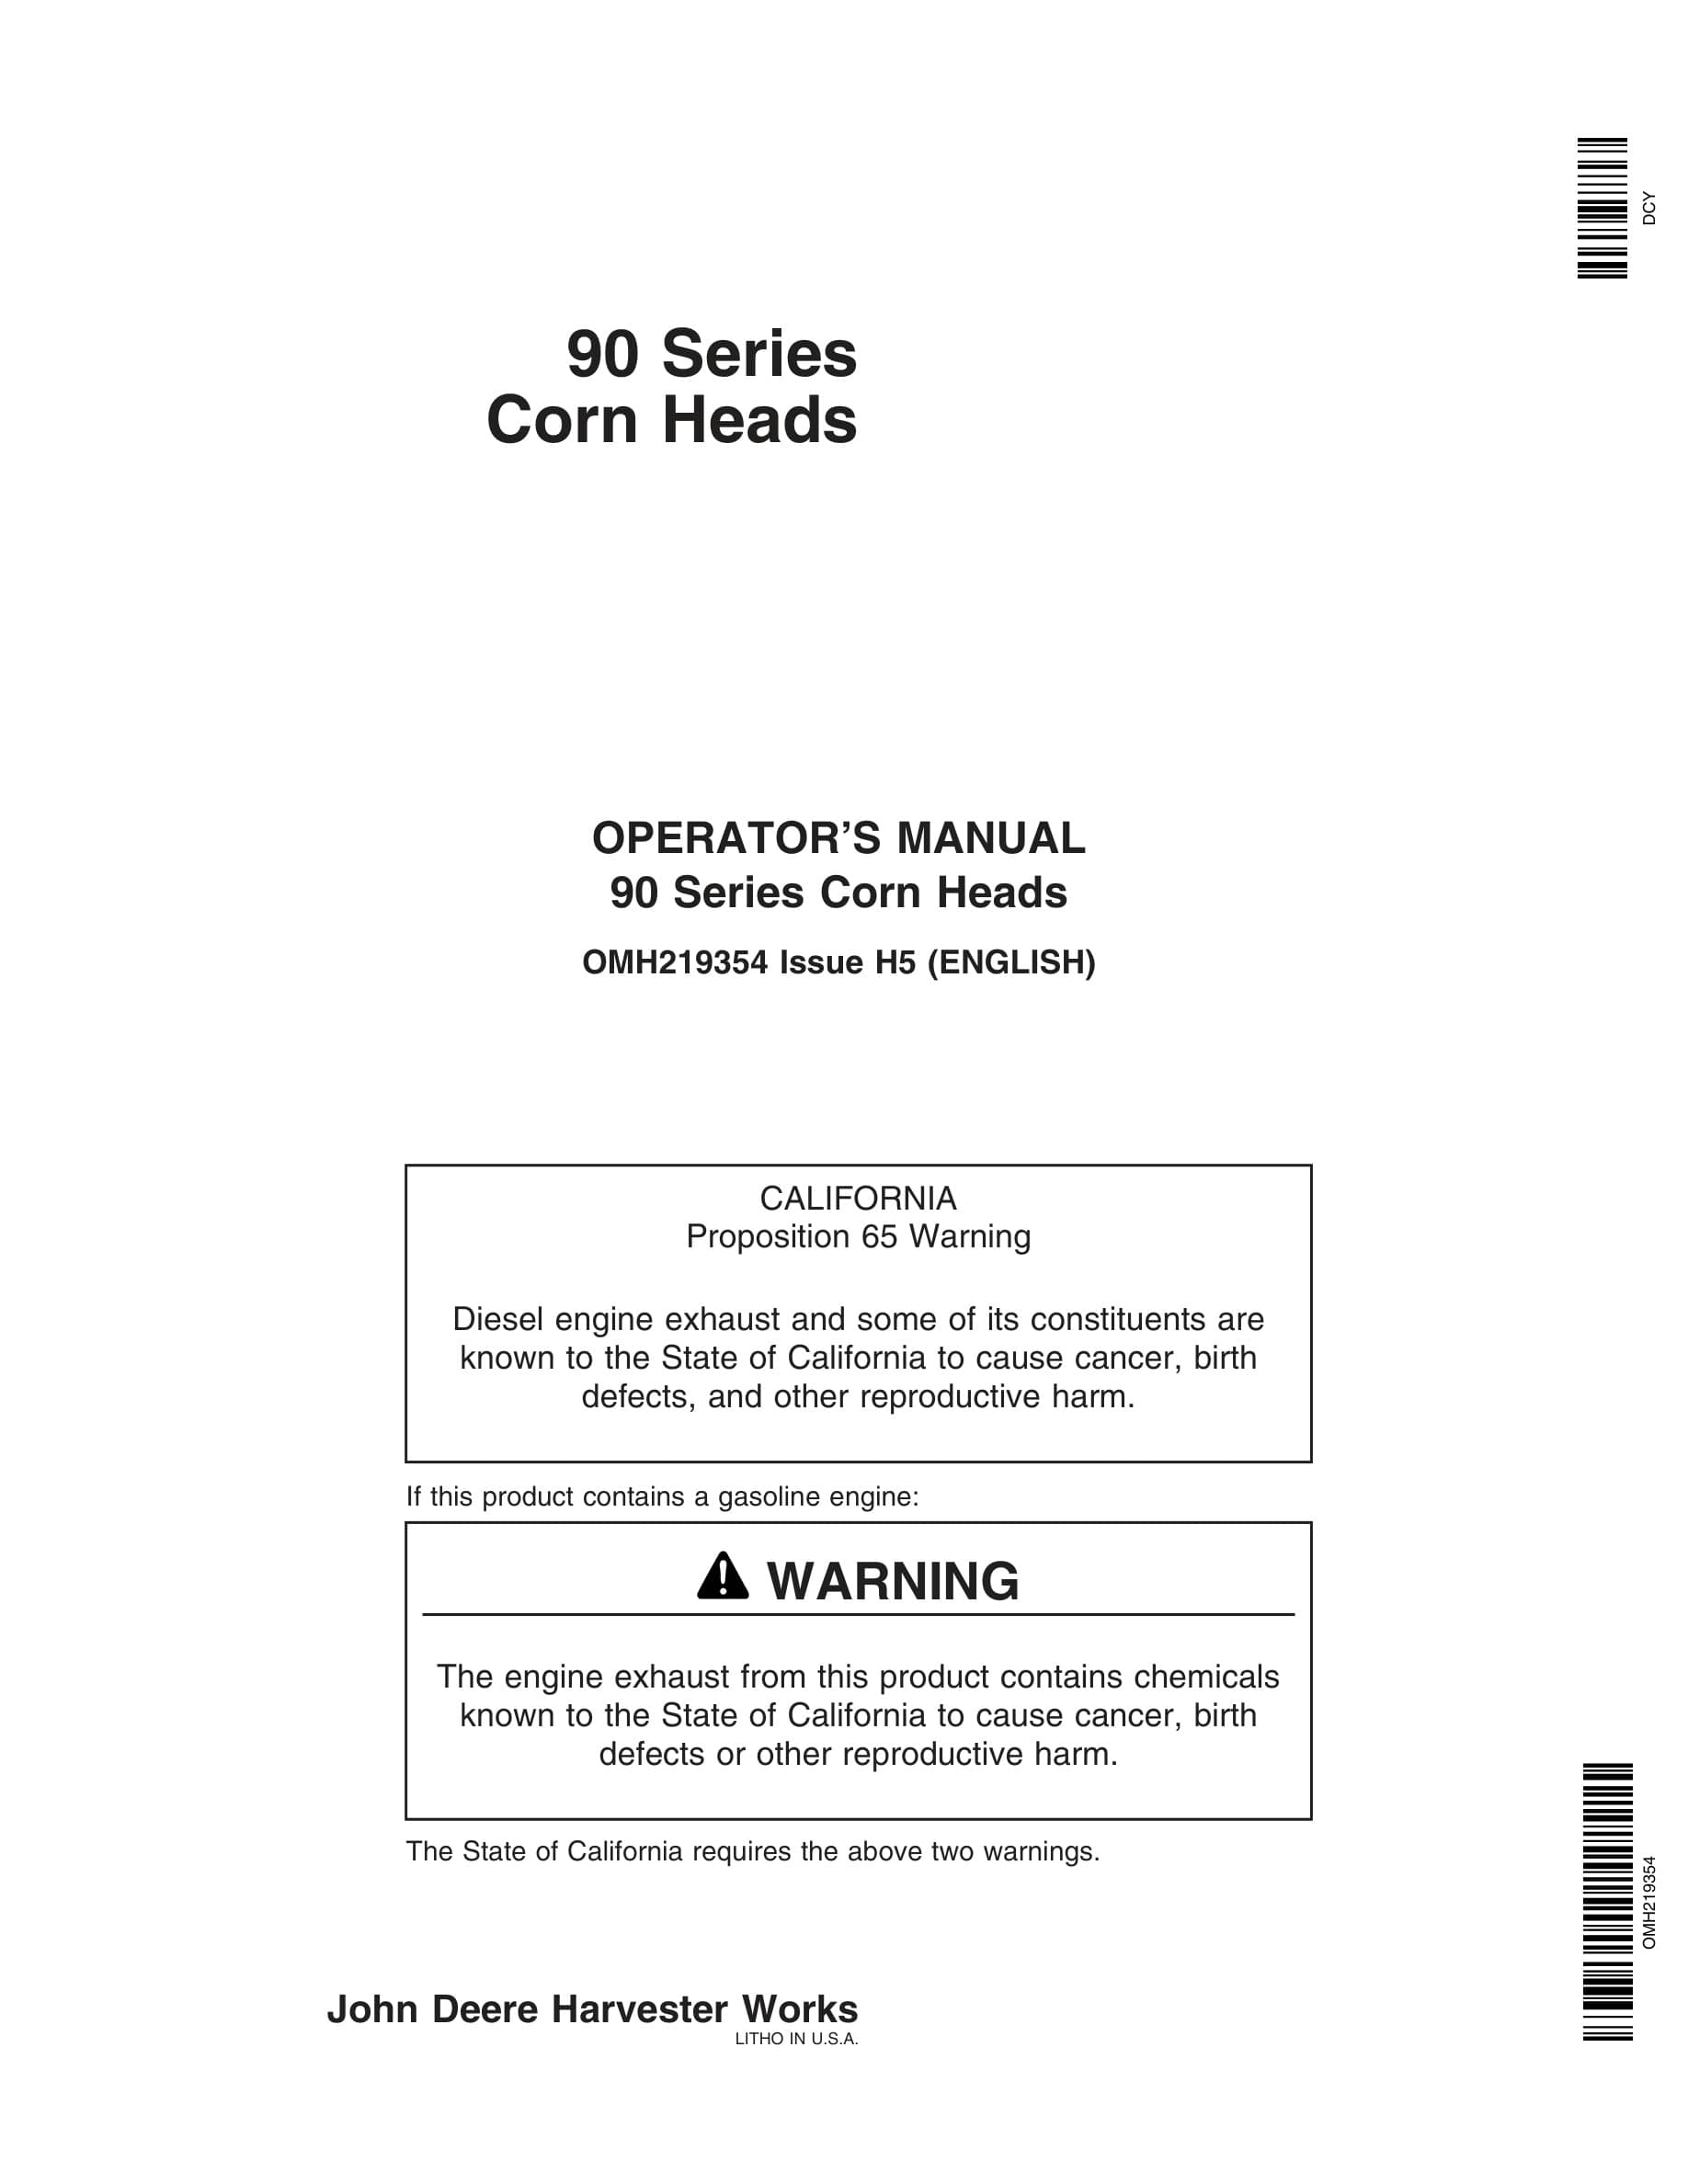 John Deere 90 Series Corn Heads Operator Manual OMH219354-1